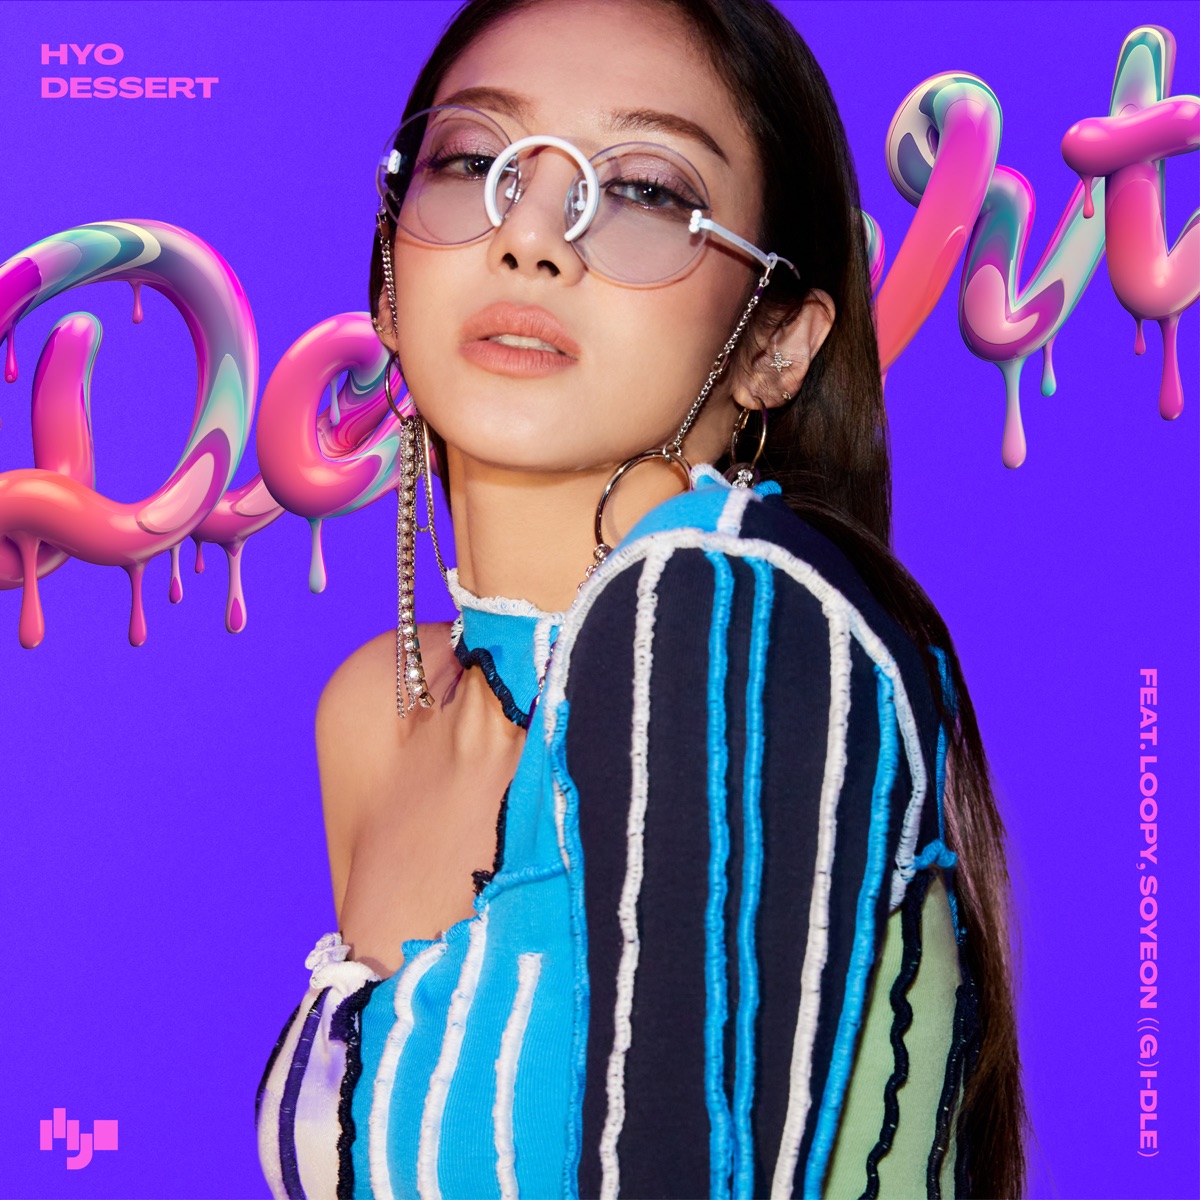 DESSERT (feat. Loopy & JEON SOYEON) - Single - Album by HYO - Apple Music